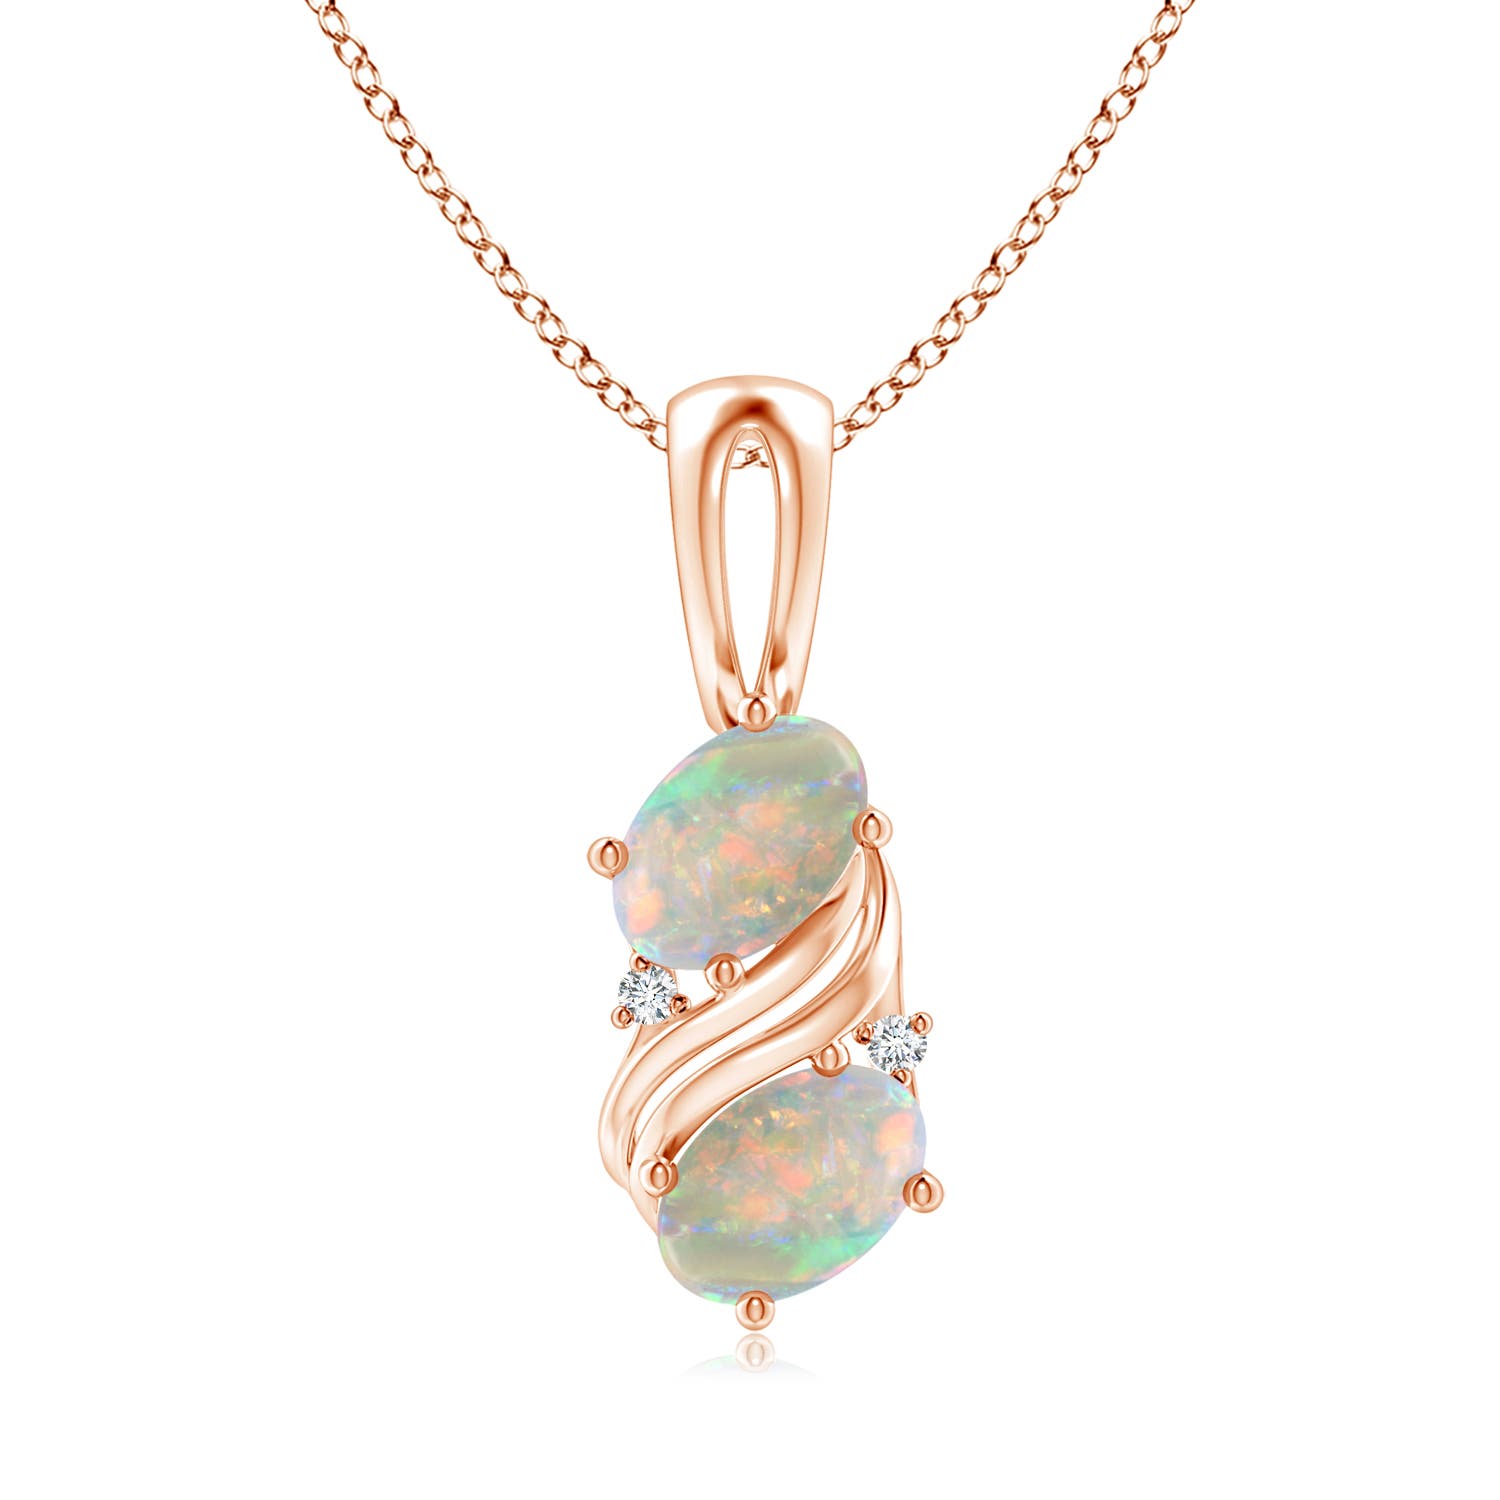 Shop Opal Pendant Necklaces for Women | Angara